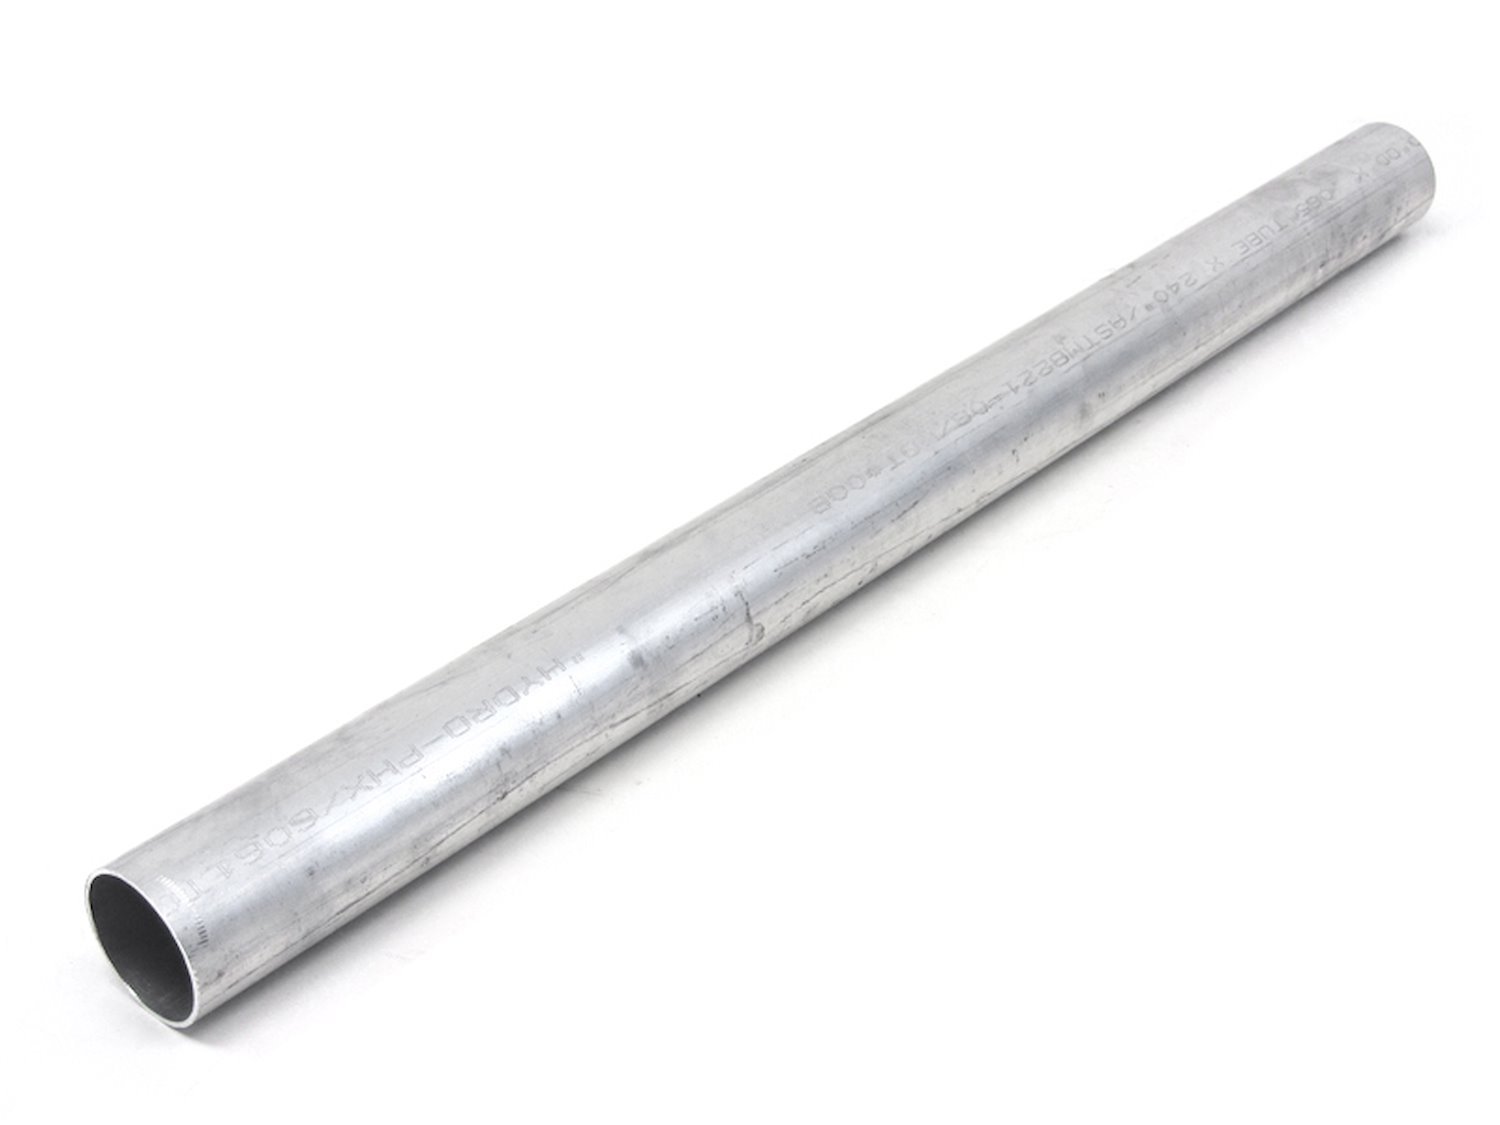 AST-2F-175 Aluminum Tubing, 6061 Aluminum, Straight Tubing, 1-3/4 in. OD, Seamless, Raw Finish, 2 ft. Long